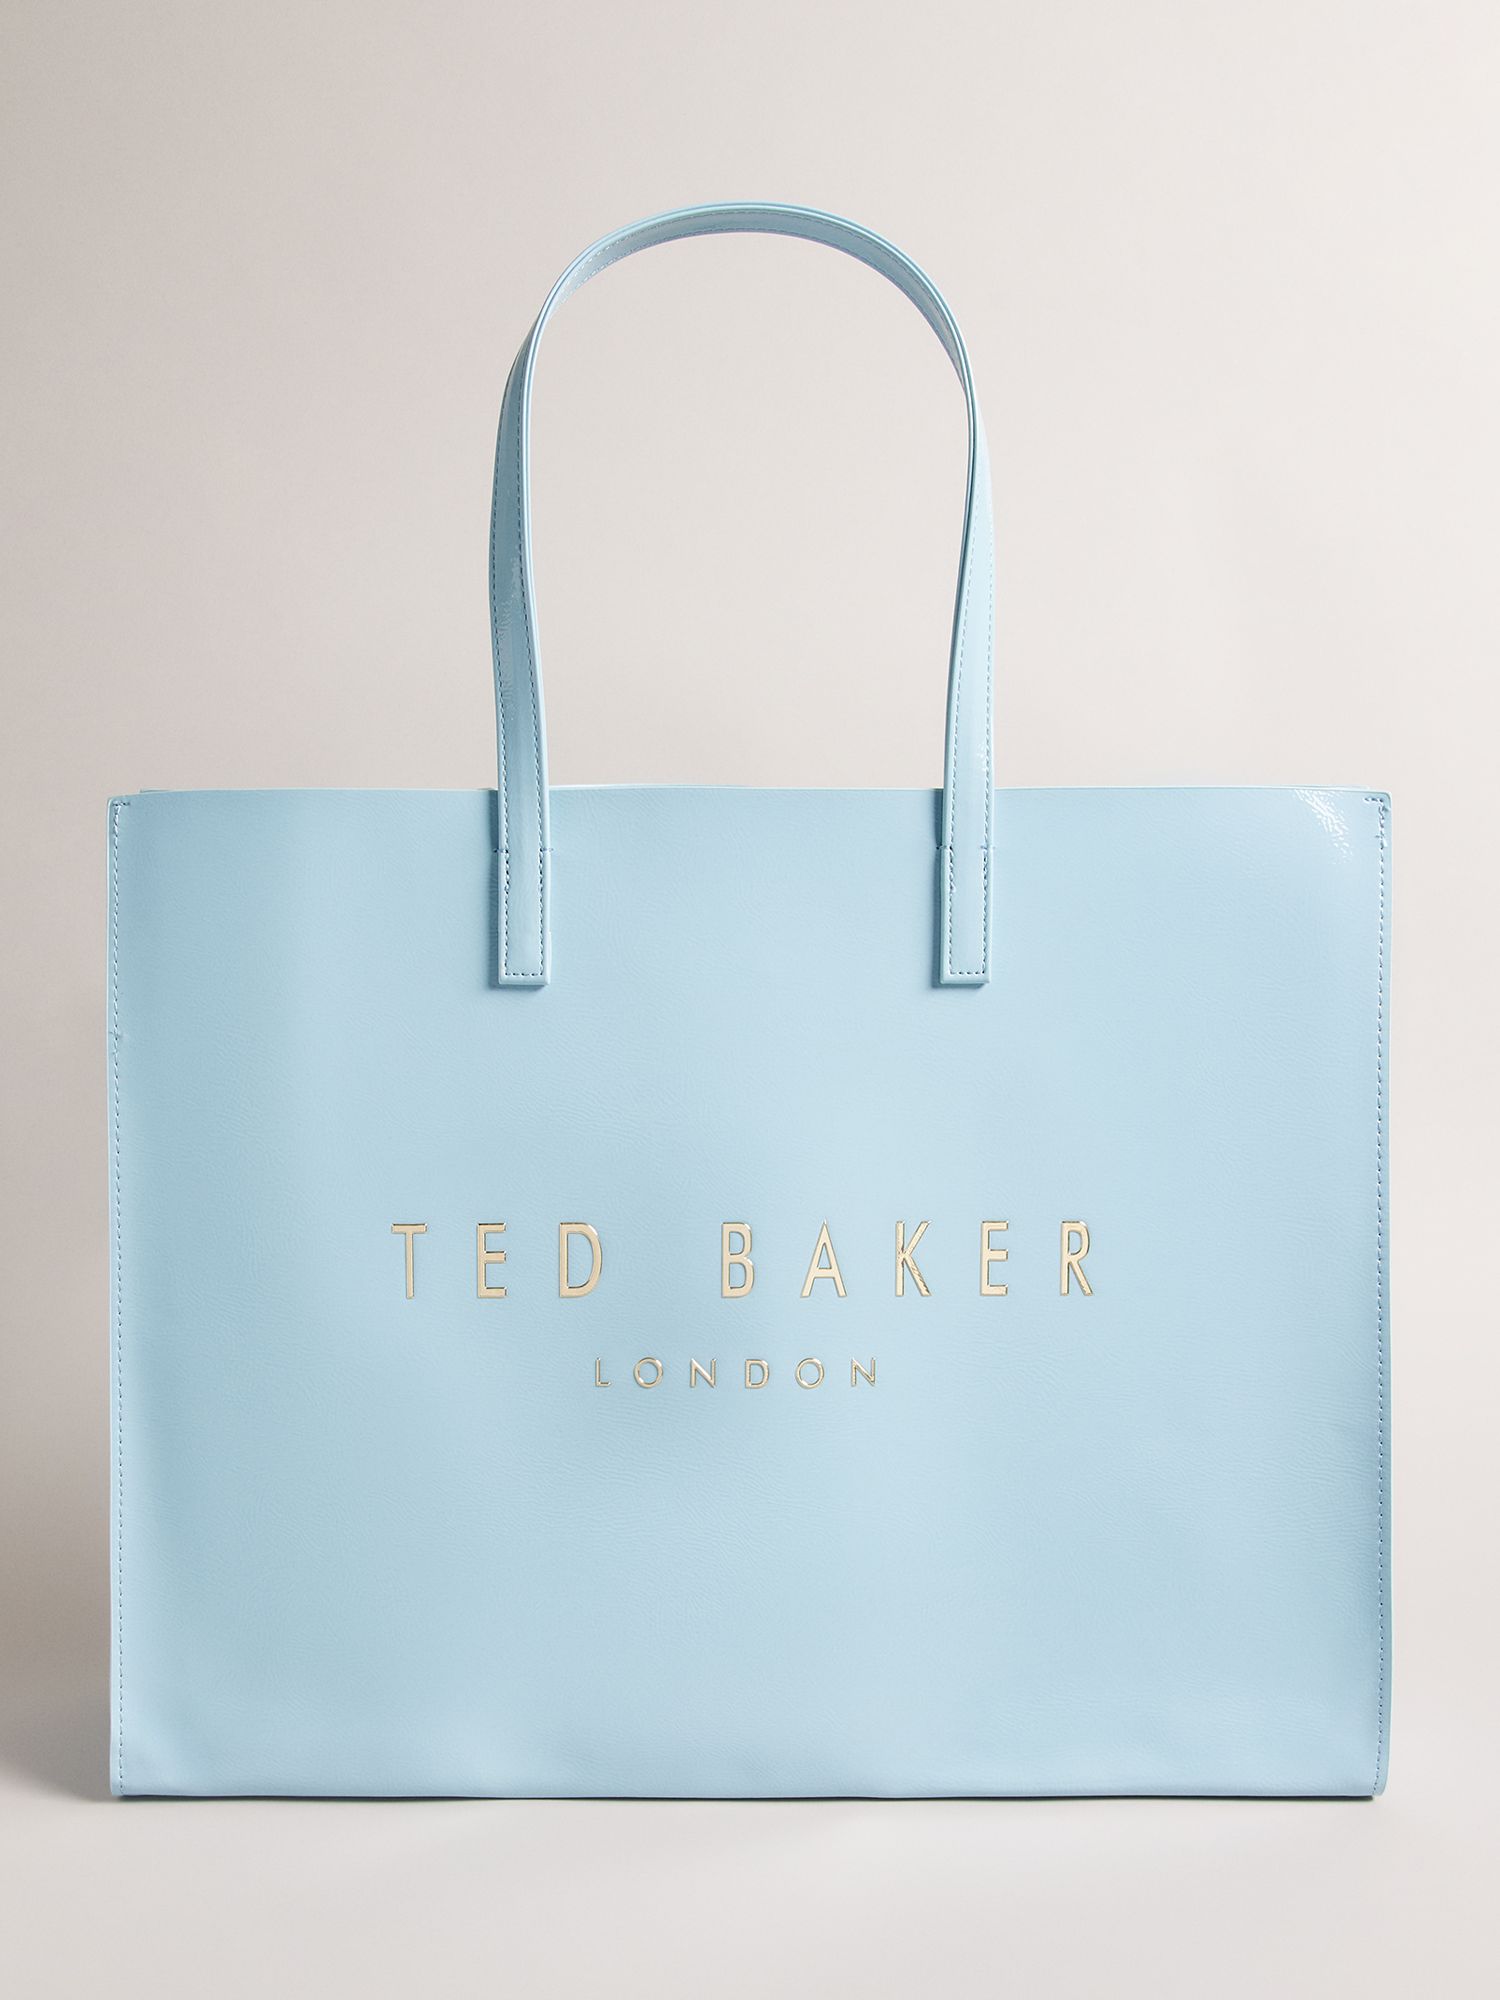 Ted Baker Crikon Icon Tote Bag, Light Blue, Stnd